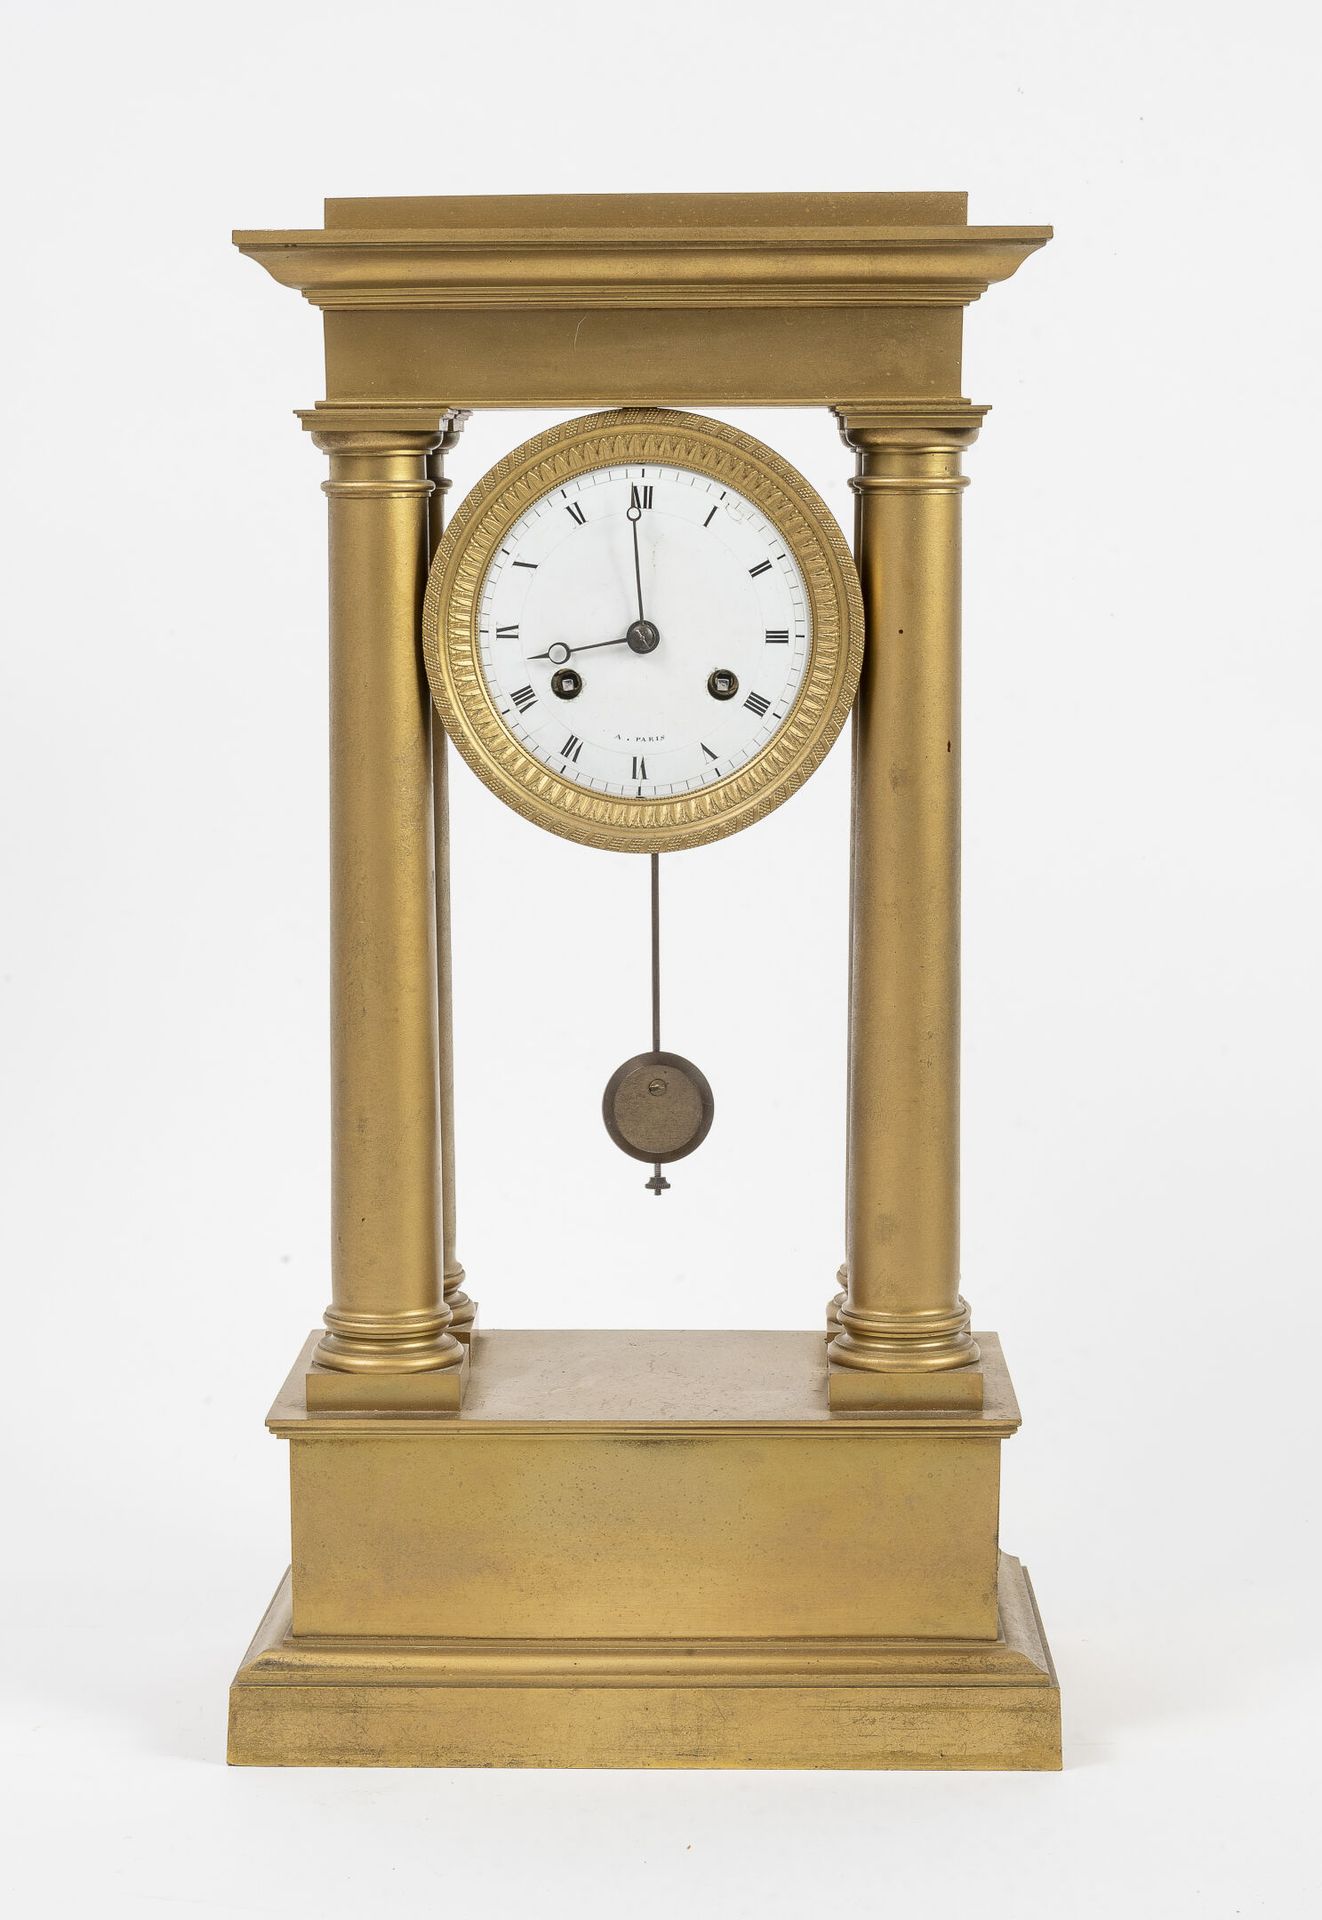 FRANCE, XIXEME SIECLE 鎏金黄铜门廊钟，全部为青铜材质，由四根多立克柱上的门廊和一个基座组成。

白色搪瓷表盘，标有 "A Paris"，有&hellip;